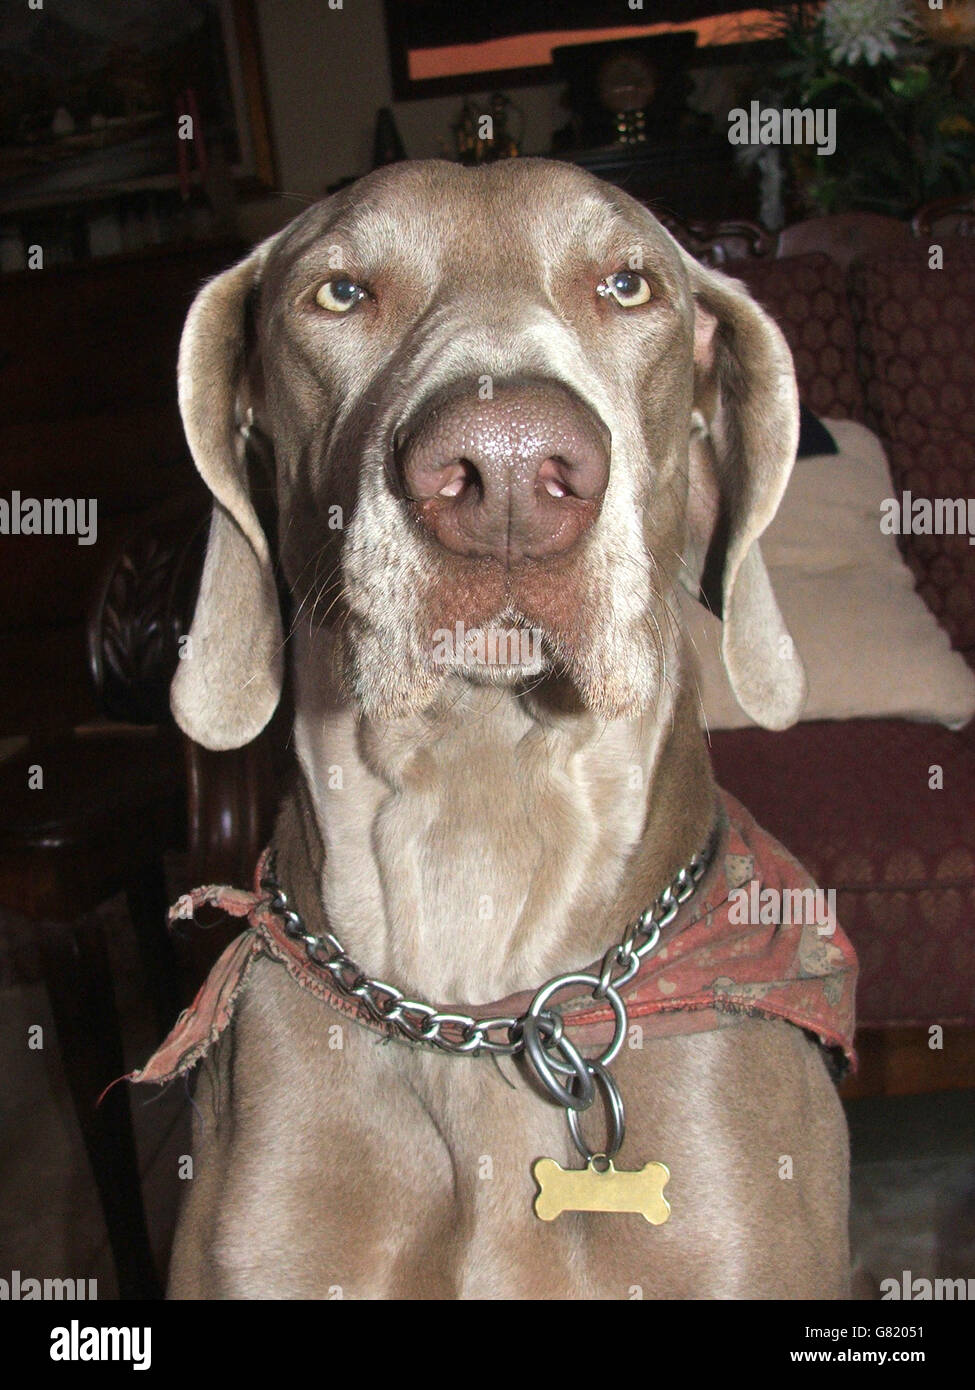 Weimaraner dog, Portrait, South Africa, 2012 Stock Photo